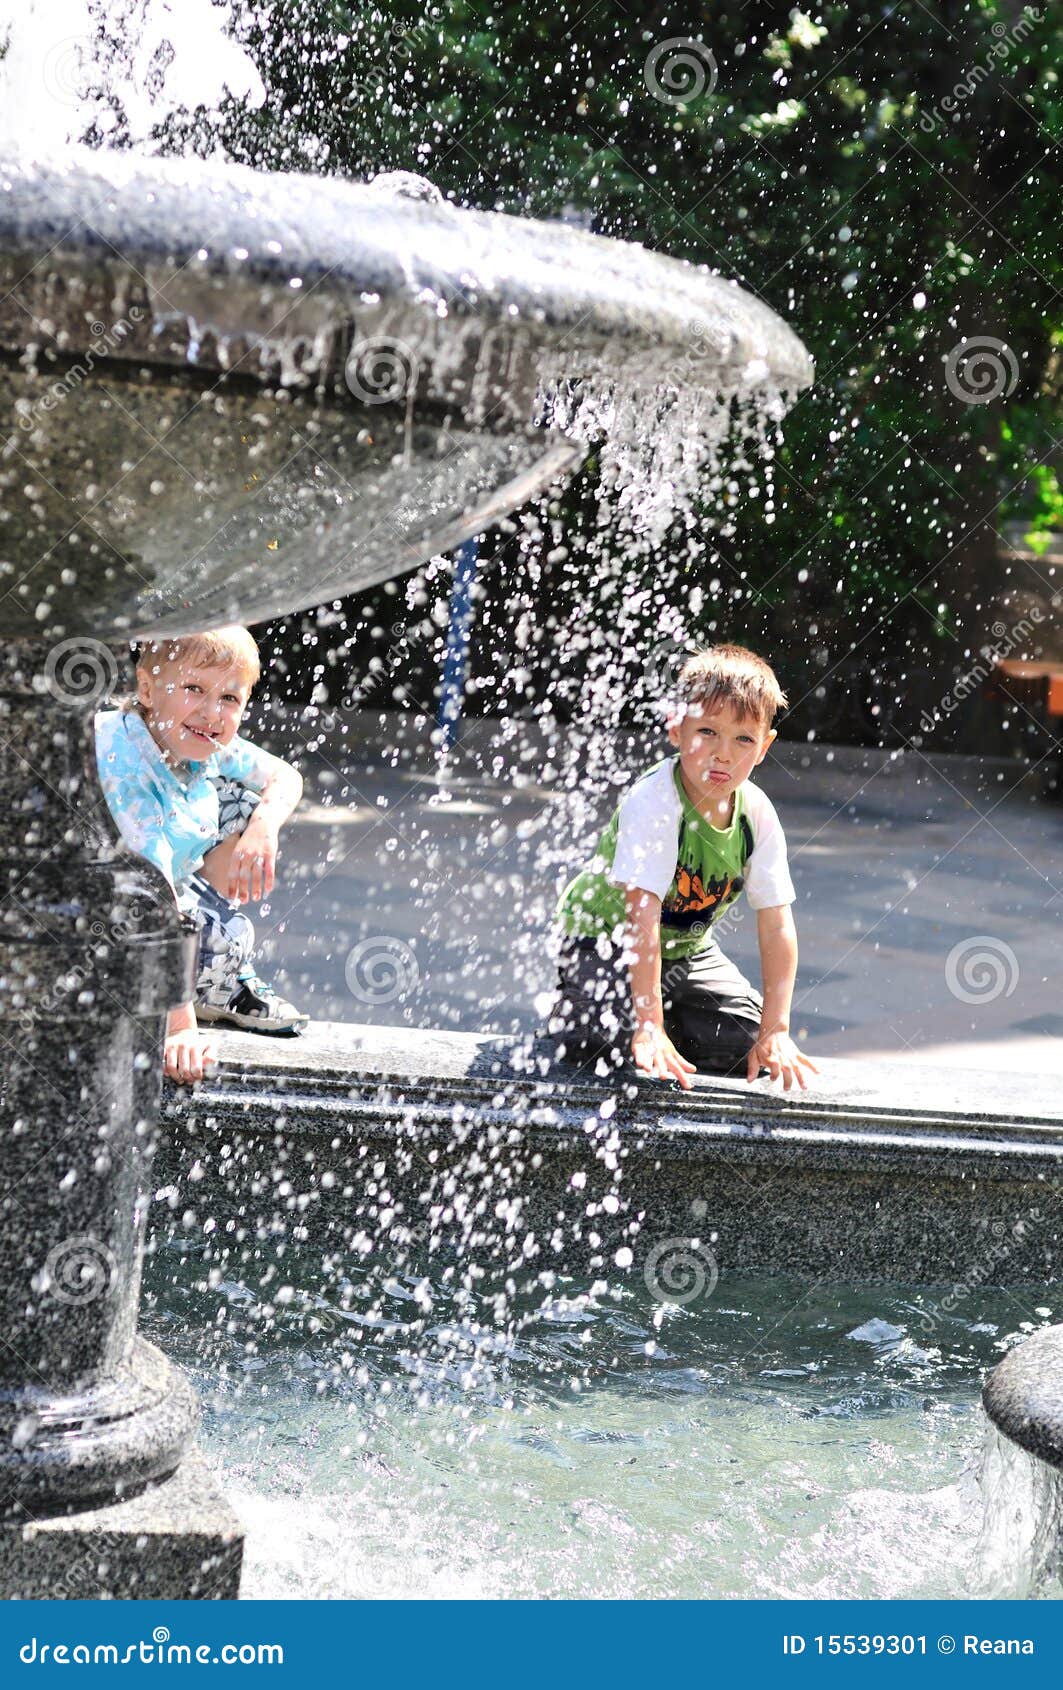 boys near waterworks